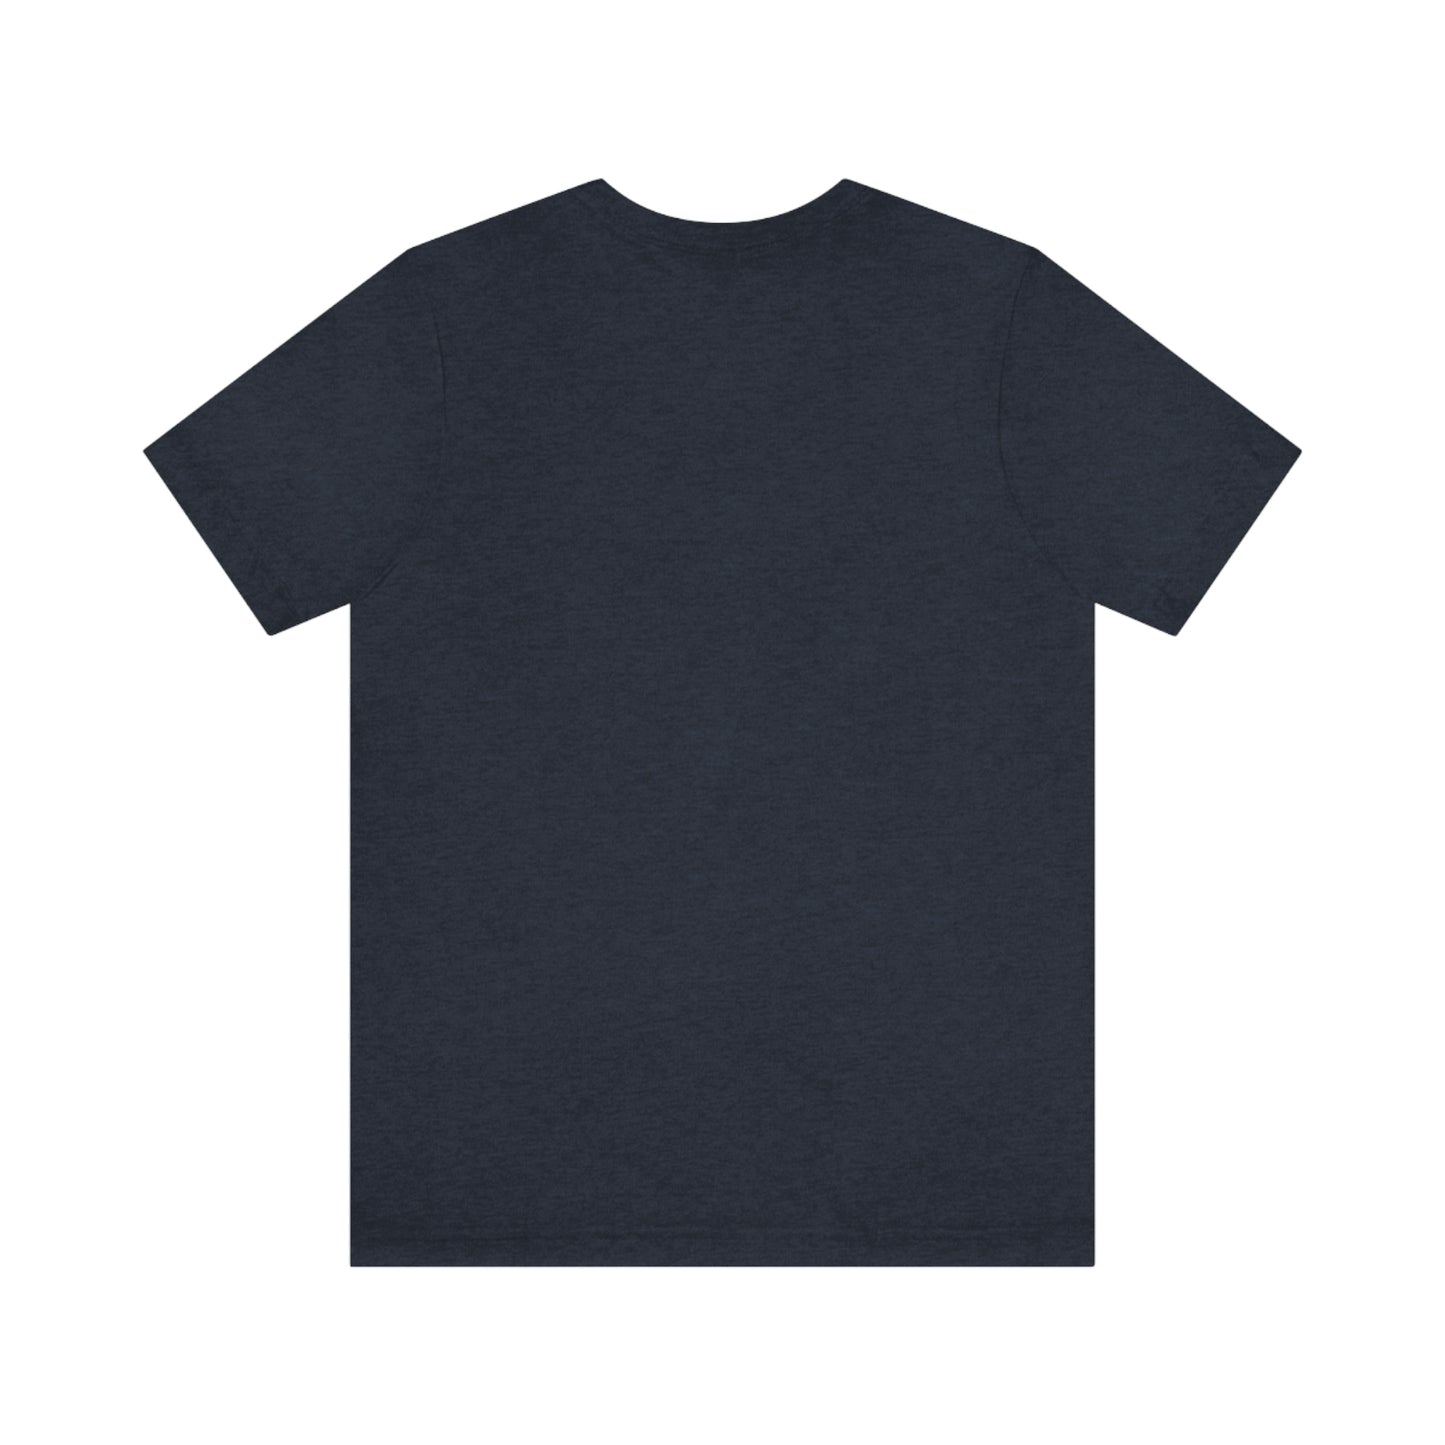 Adobe Dreams Unisex Short Sleeve T-Shirt